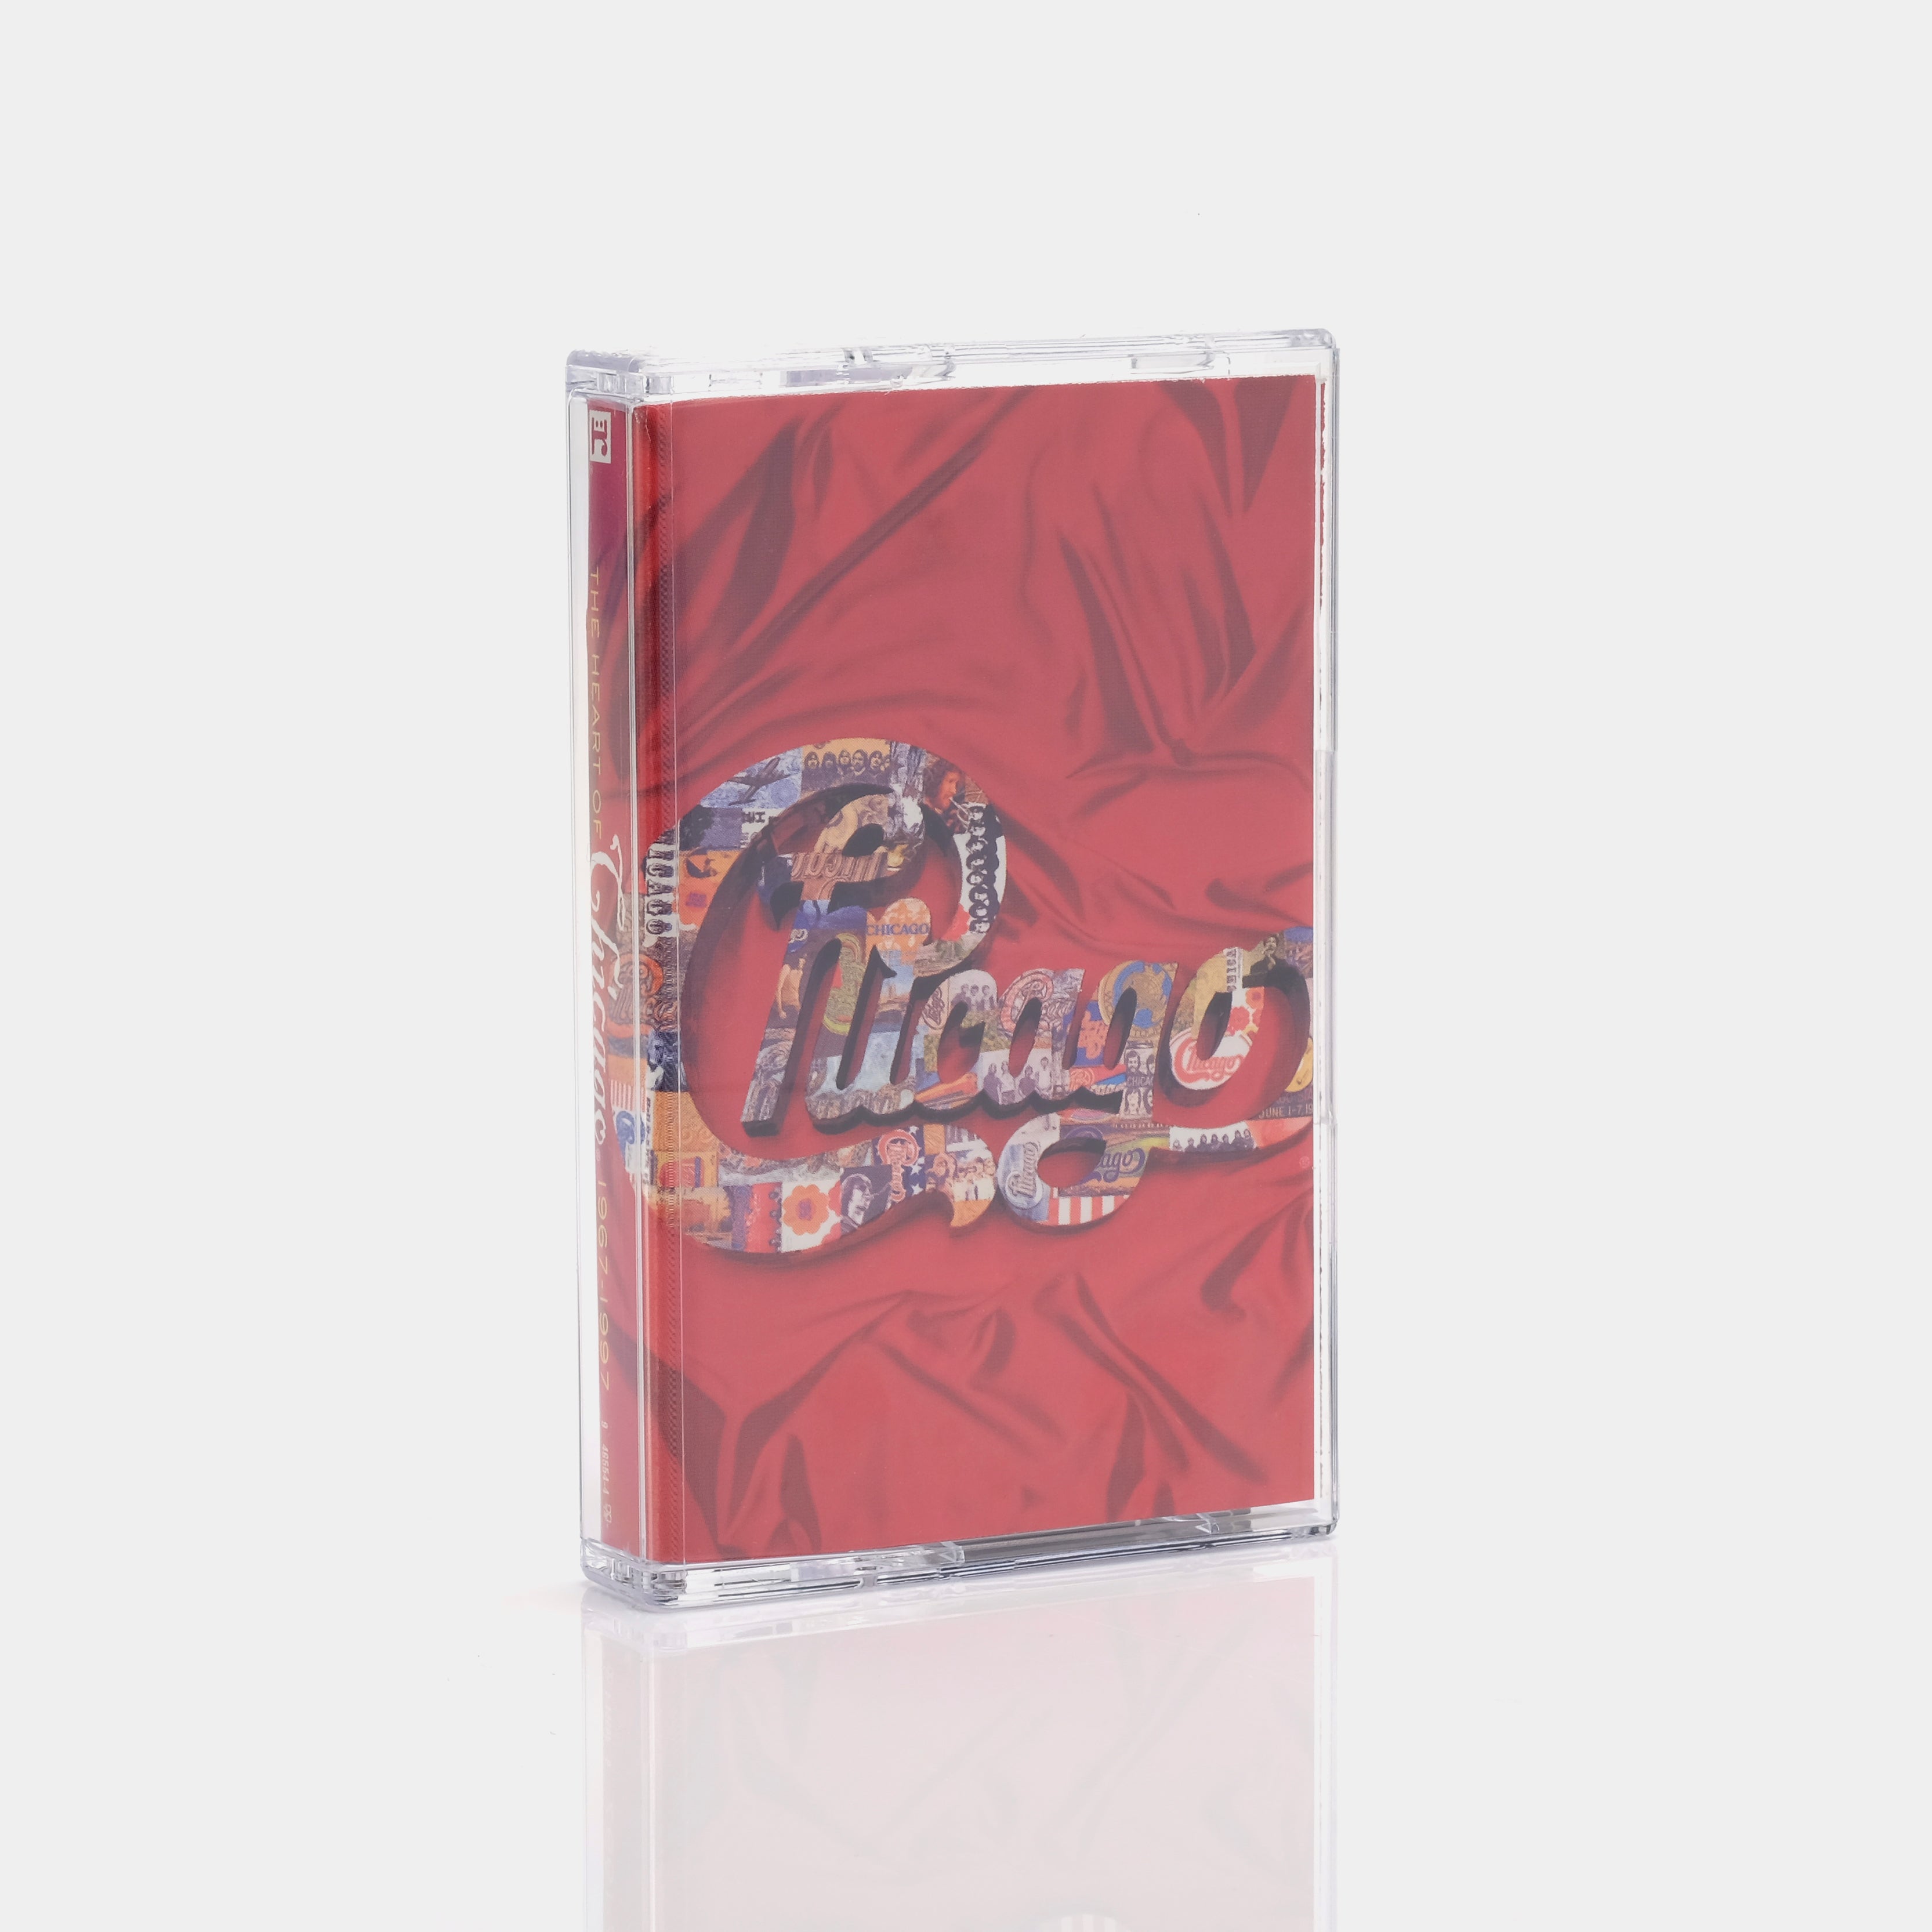 Chicago - The Heart Of Chicago Cassette Tape